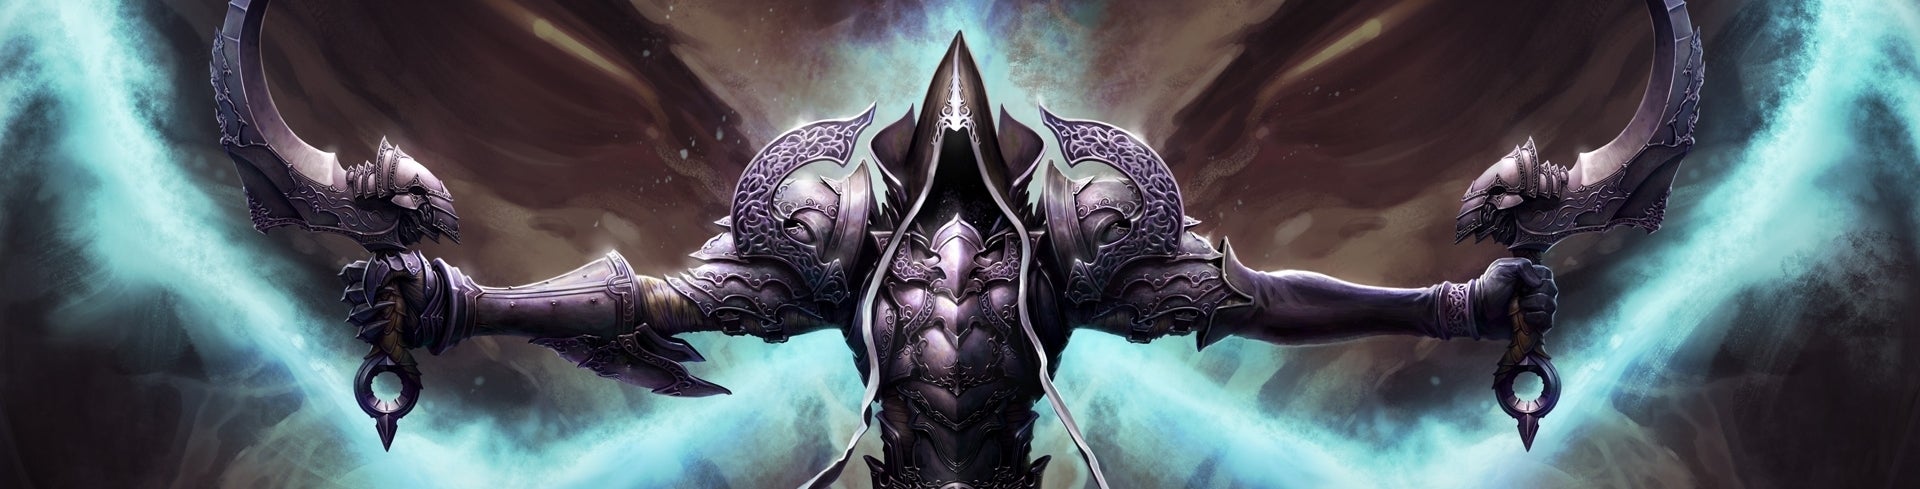 Imagen para Análisis de Diablo III: Reaper of Souls